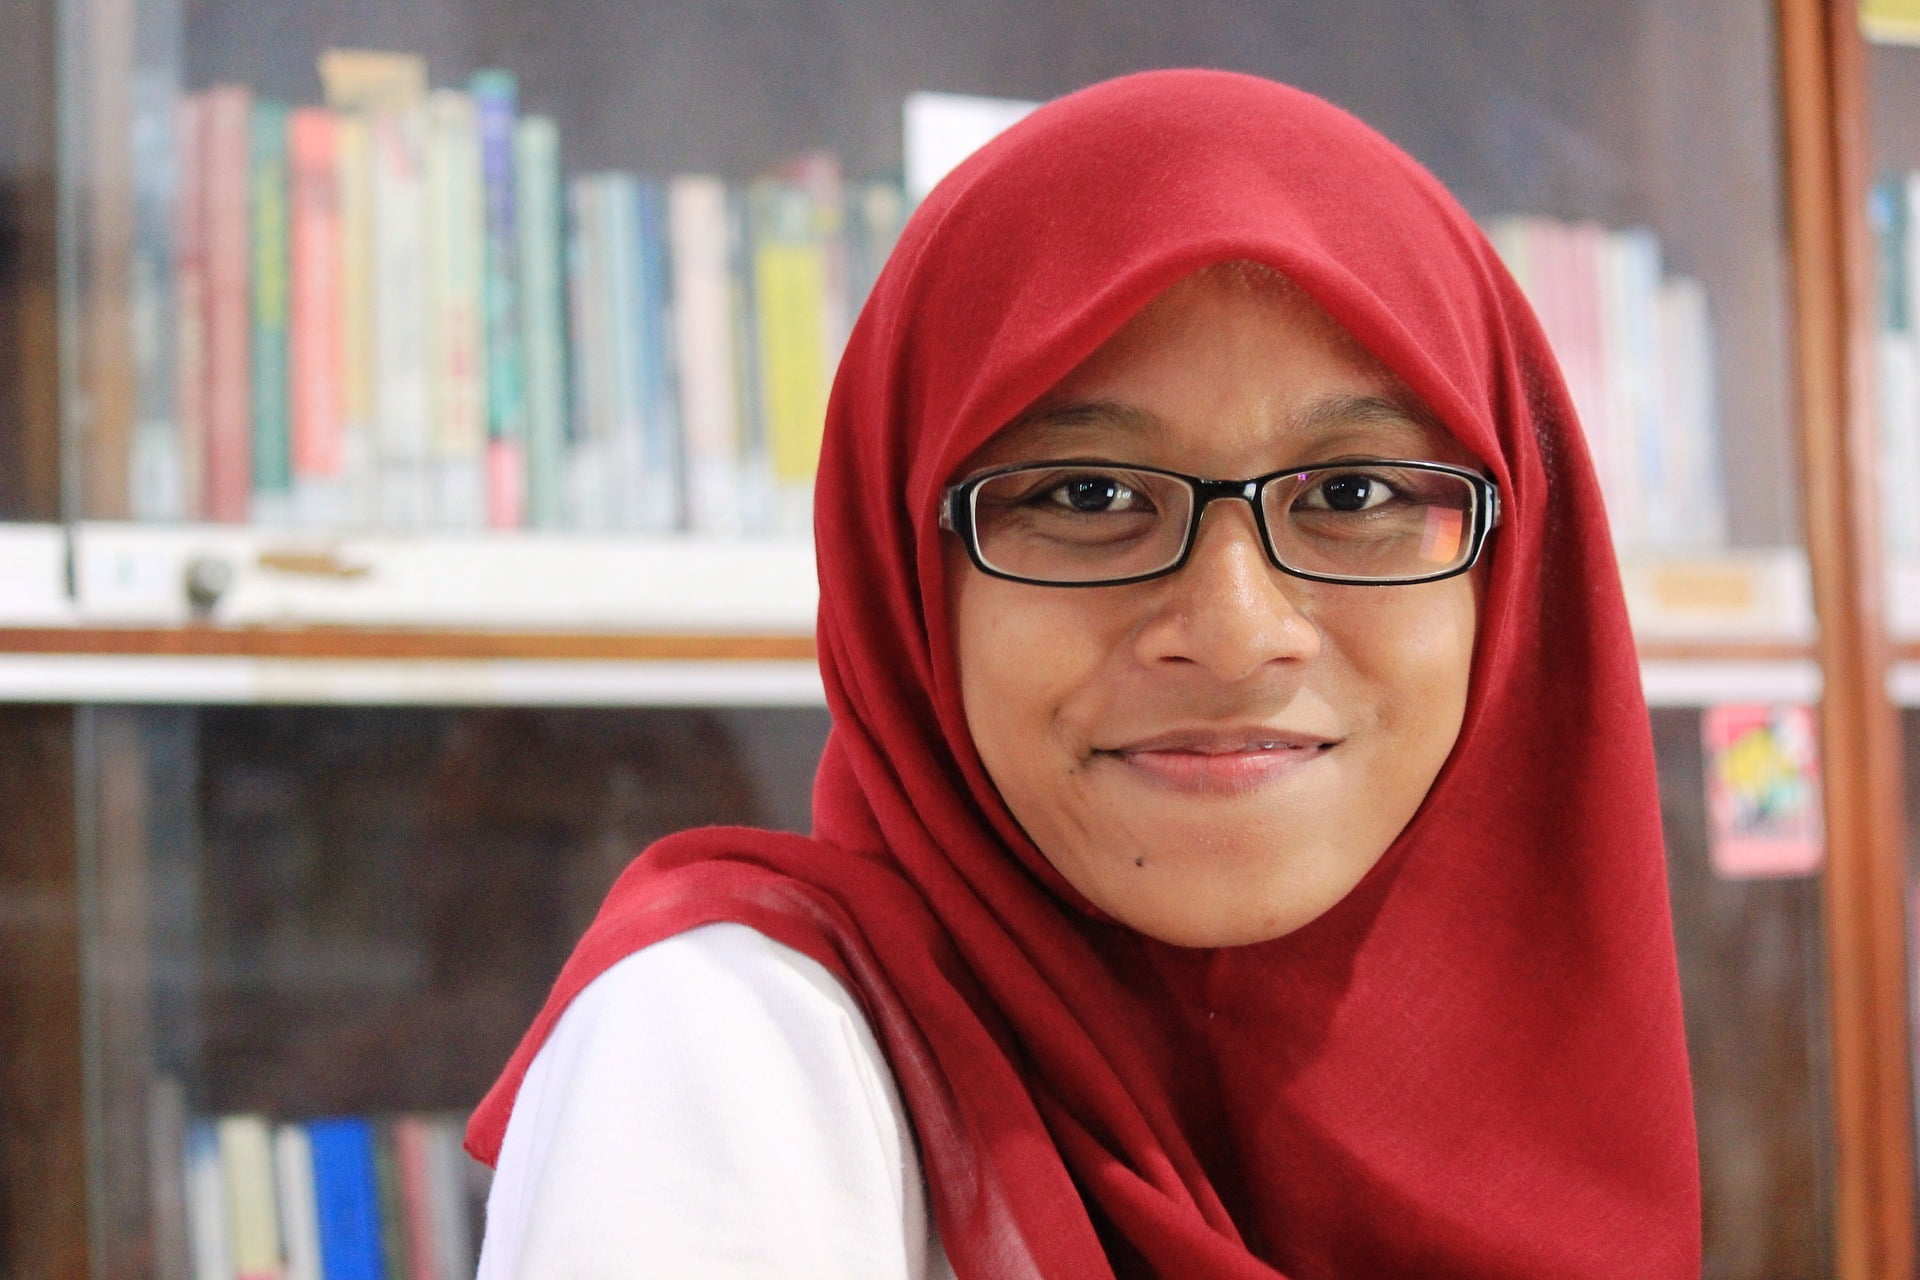 muslim girl in red headscarf